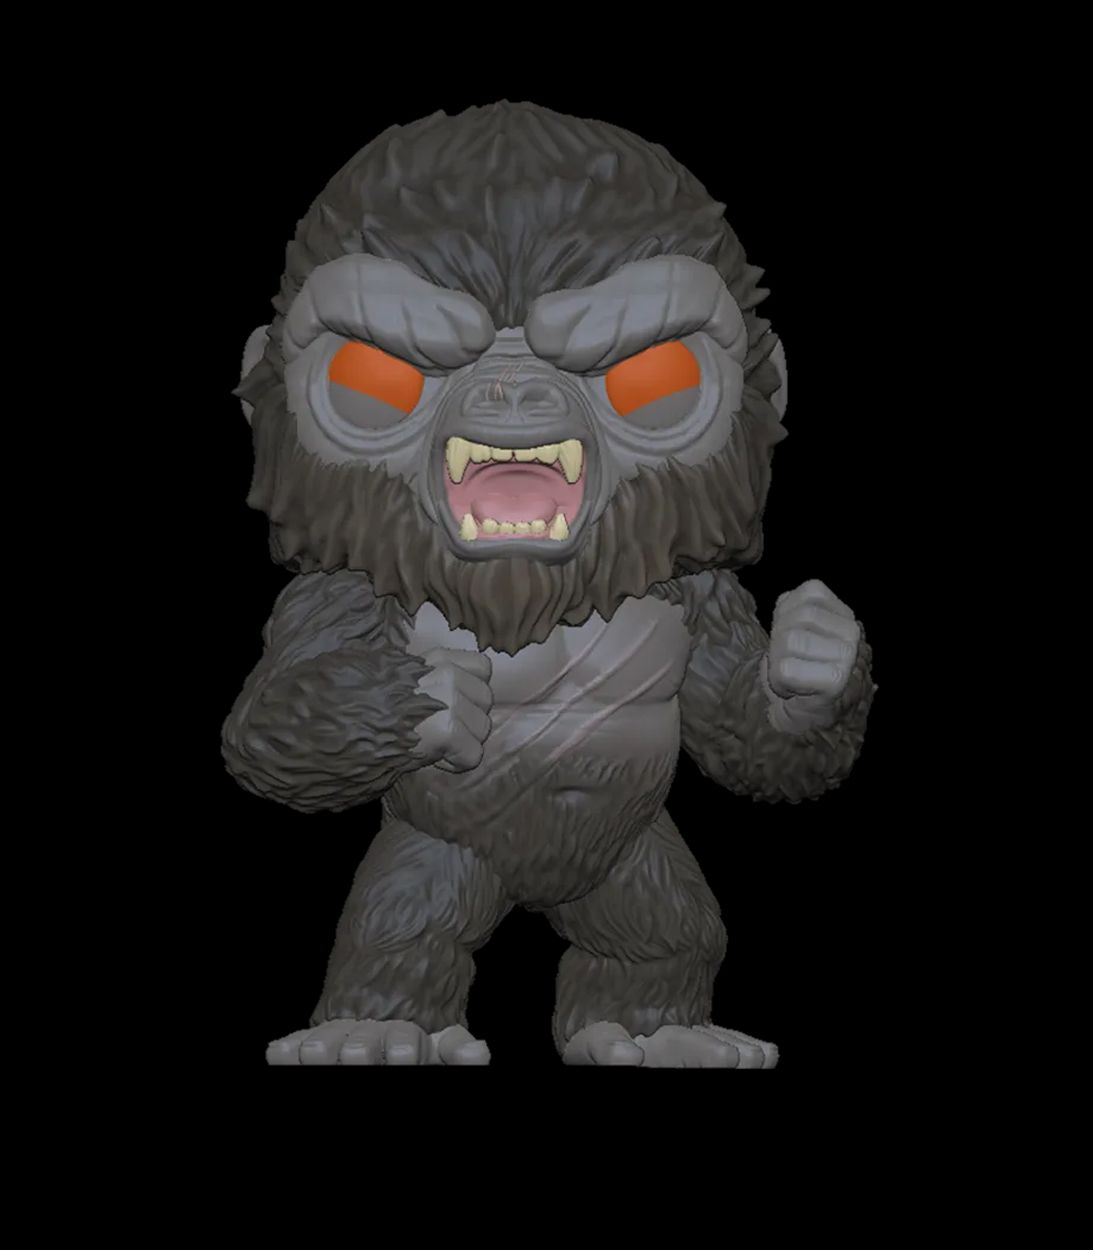 Godzilla Vs Kong Funko Pops Announced Ahead of the Monsters’ Epic Showdown